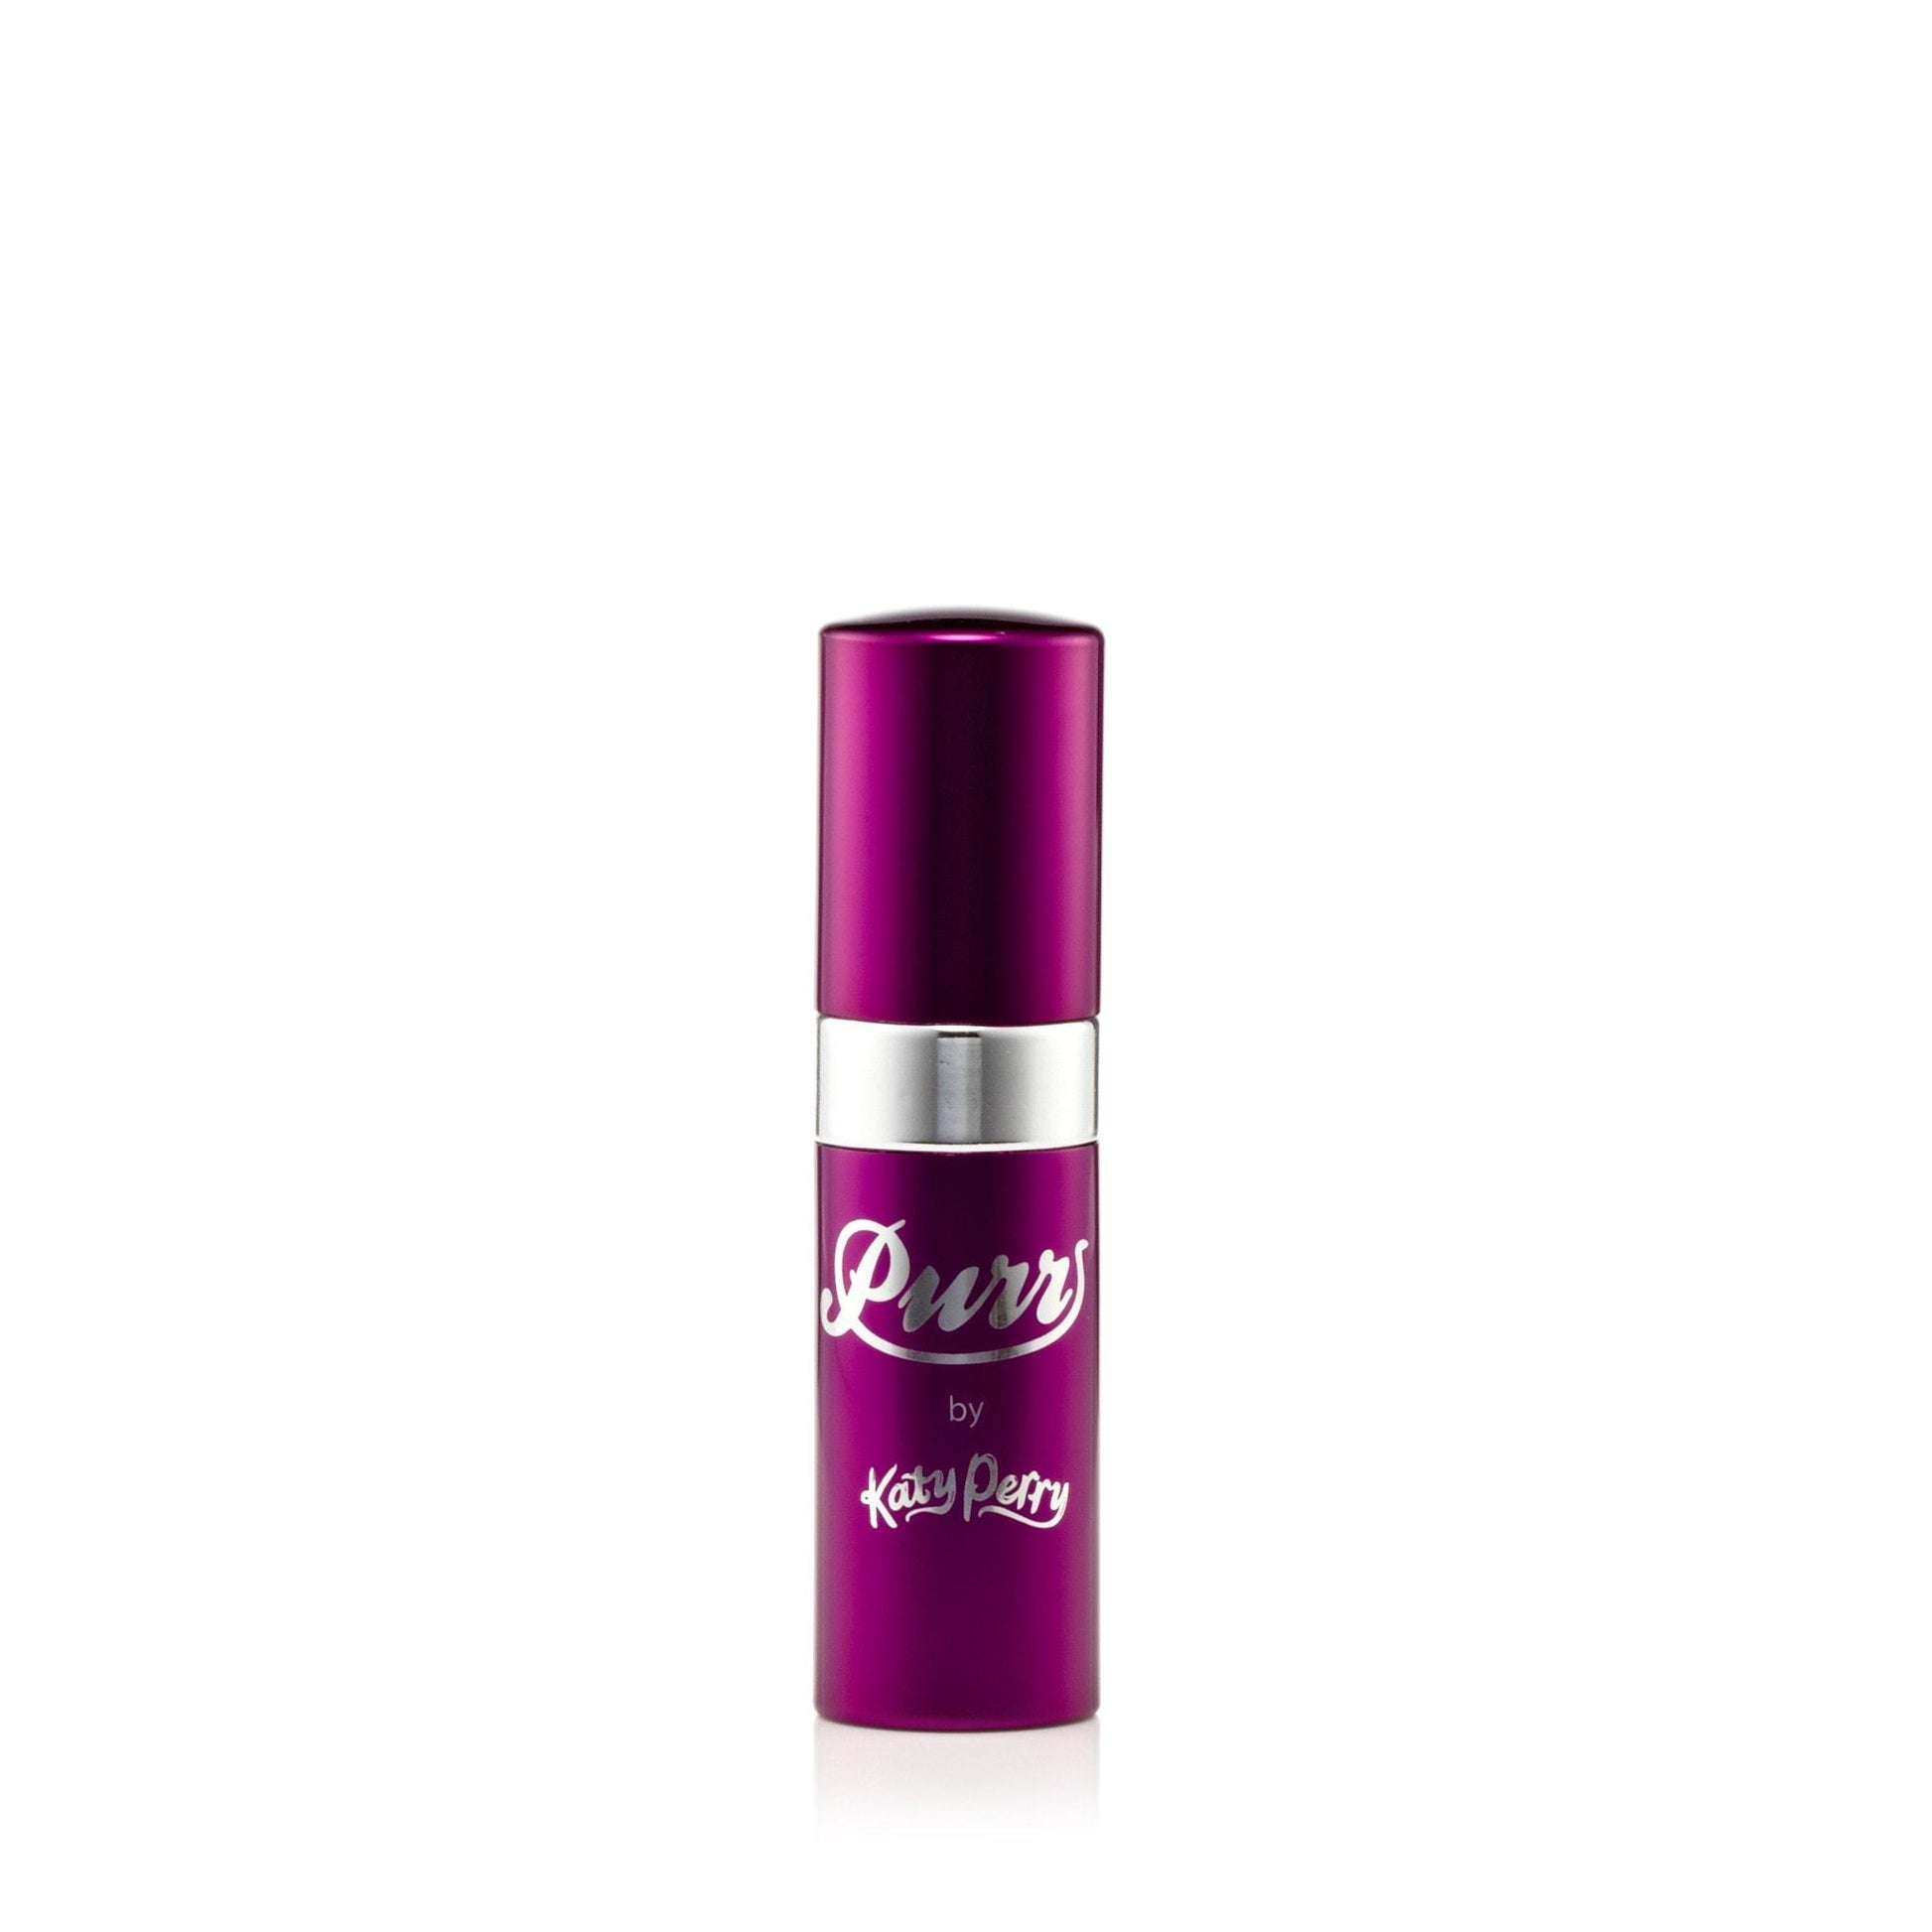 Purr Eau de Parfum Spray for Women by Katy Perry, Product image 2